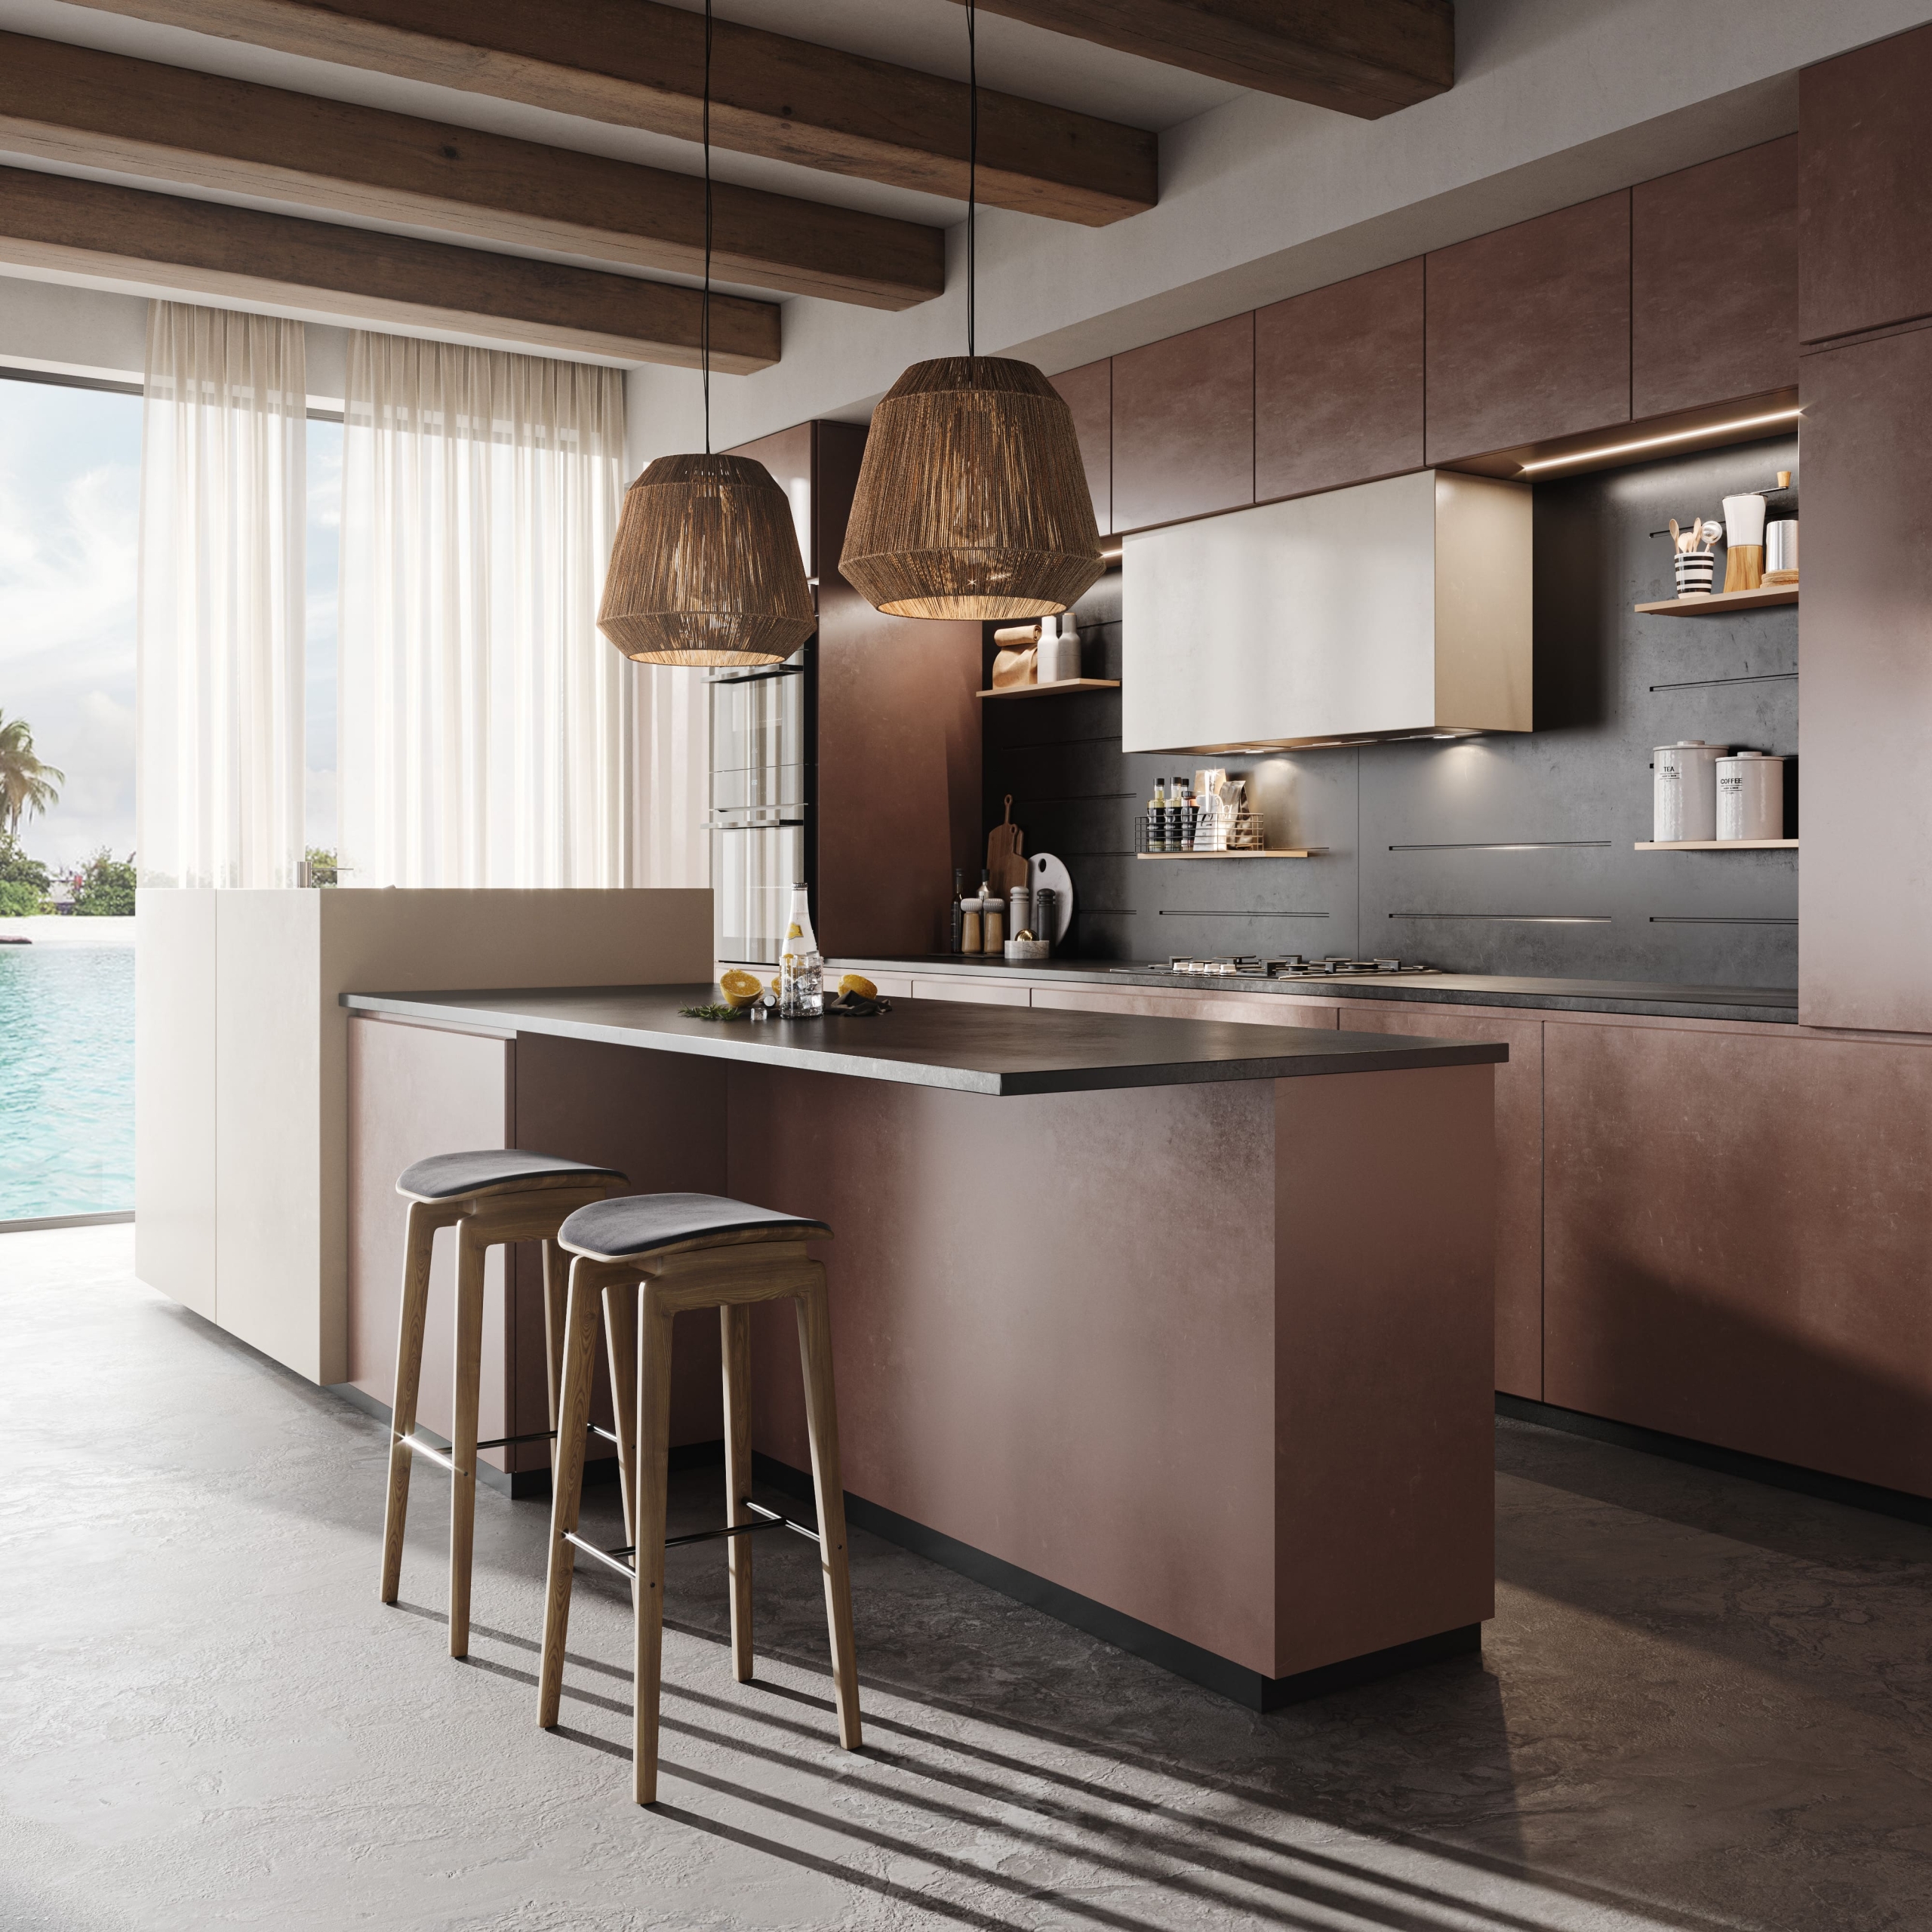 Product CGI for Designer Kitchen Furniture Business Online